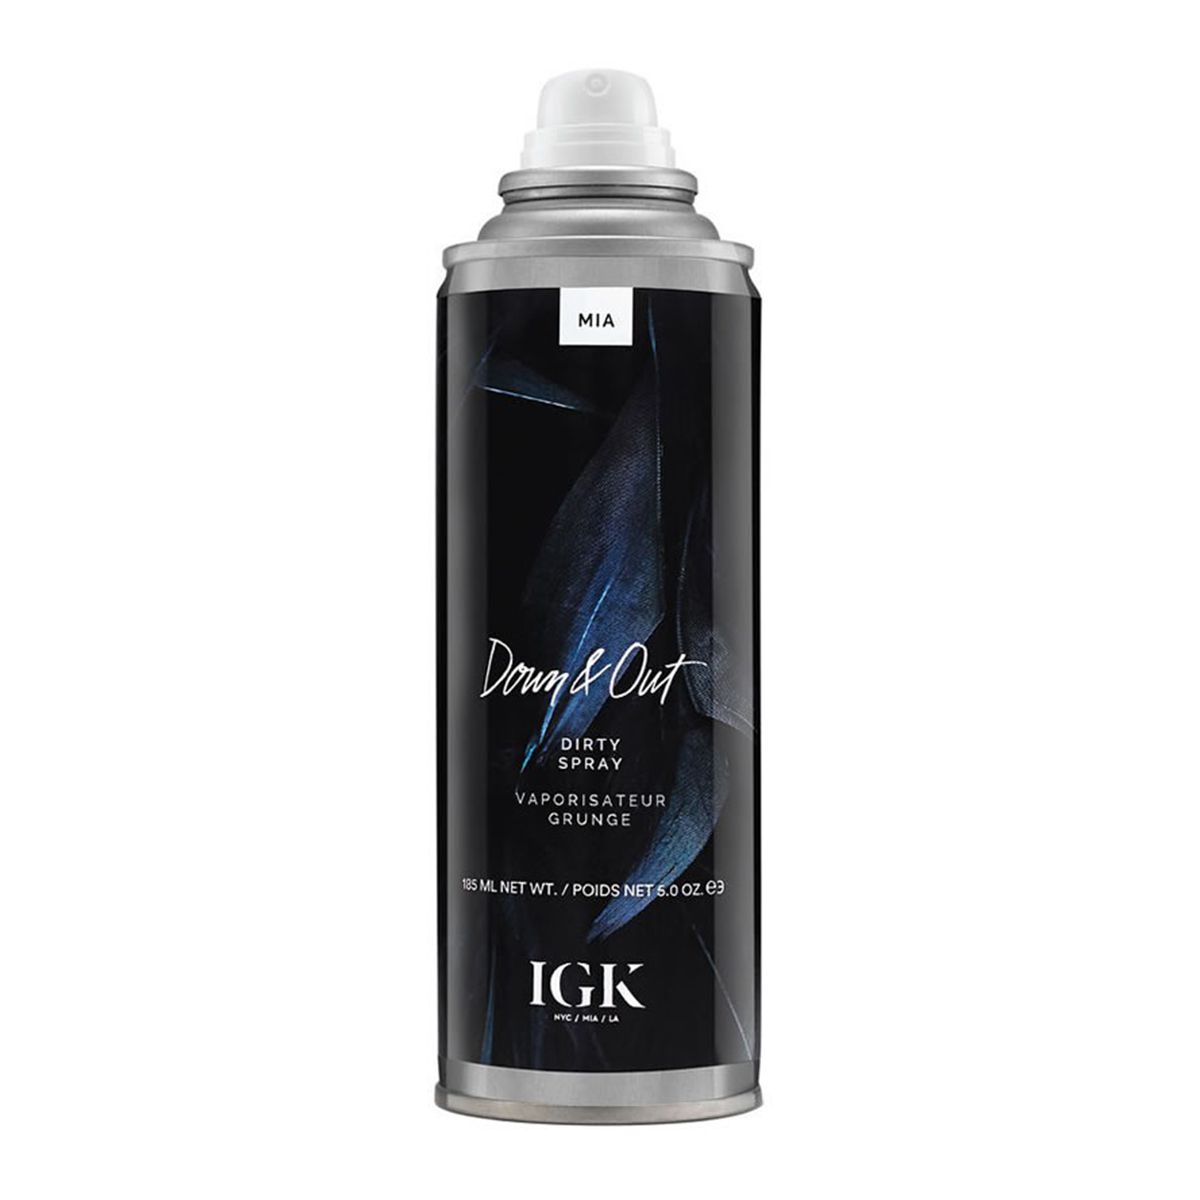 A bottle of IGK texture spray 